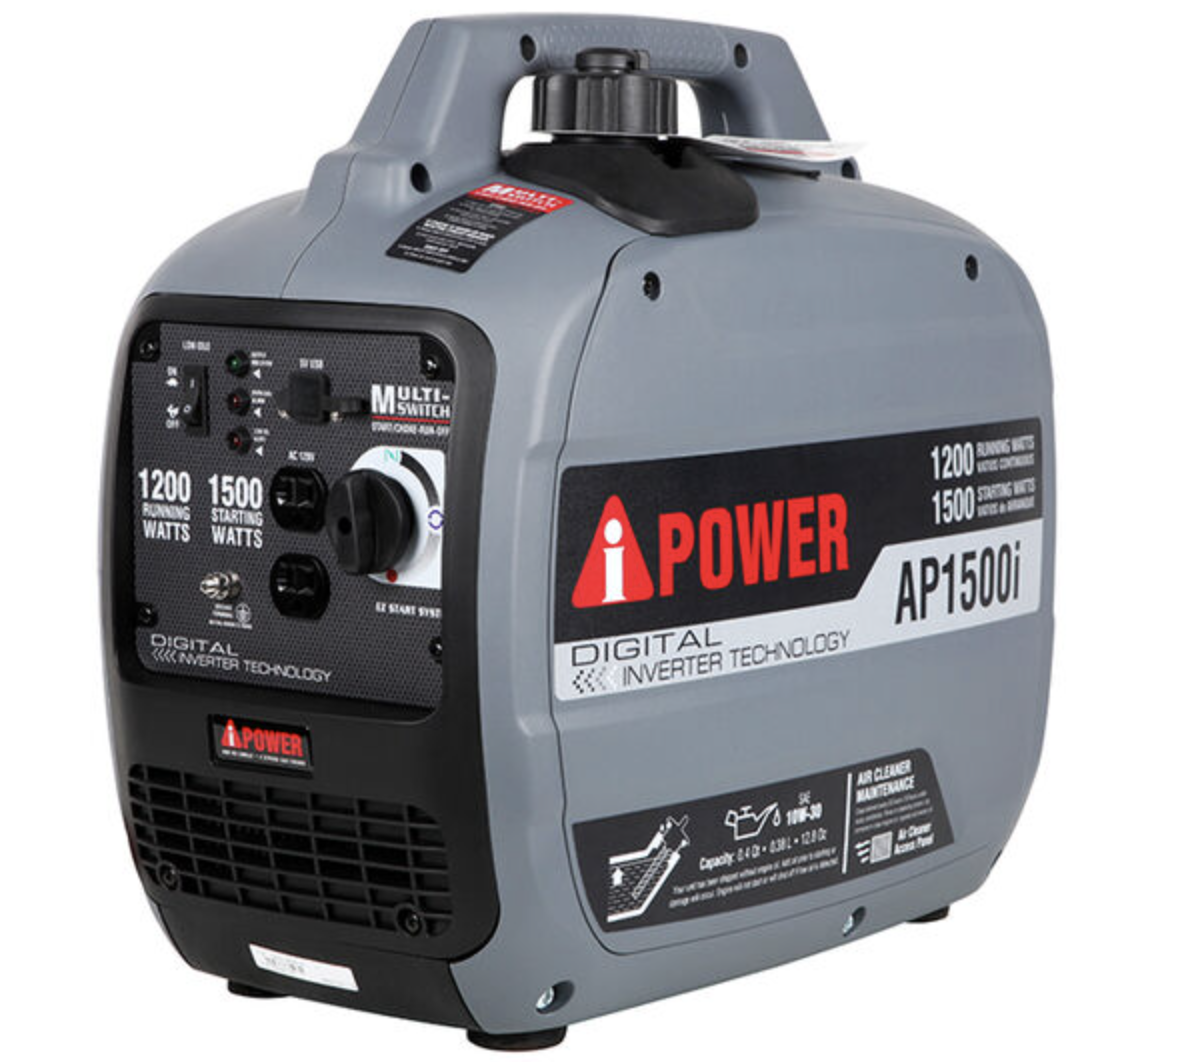 A-iPower 1500 Watt Inverter Generator